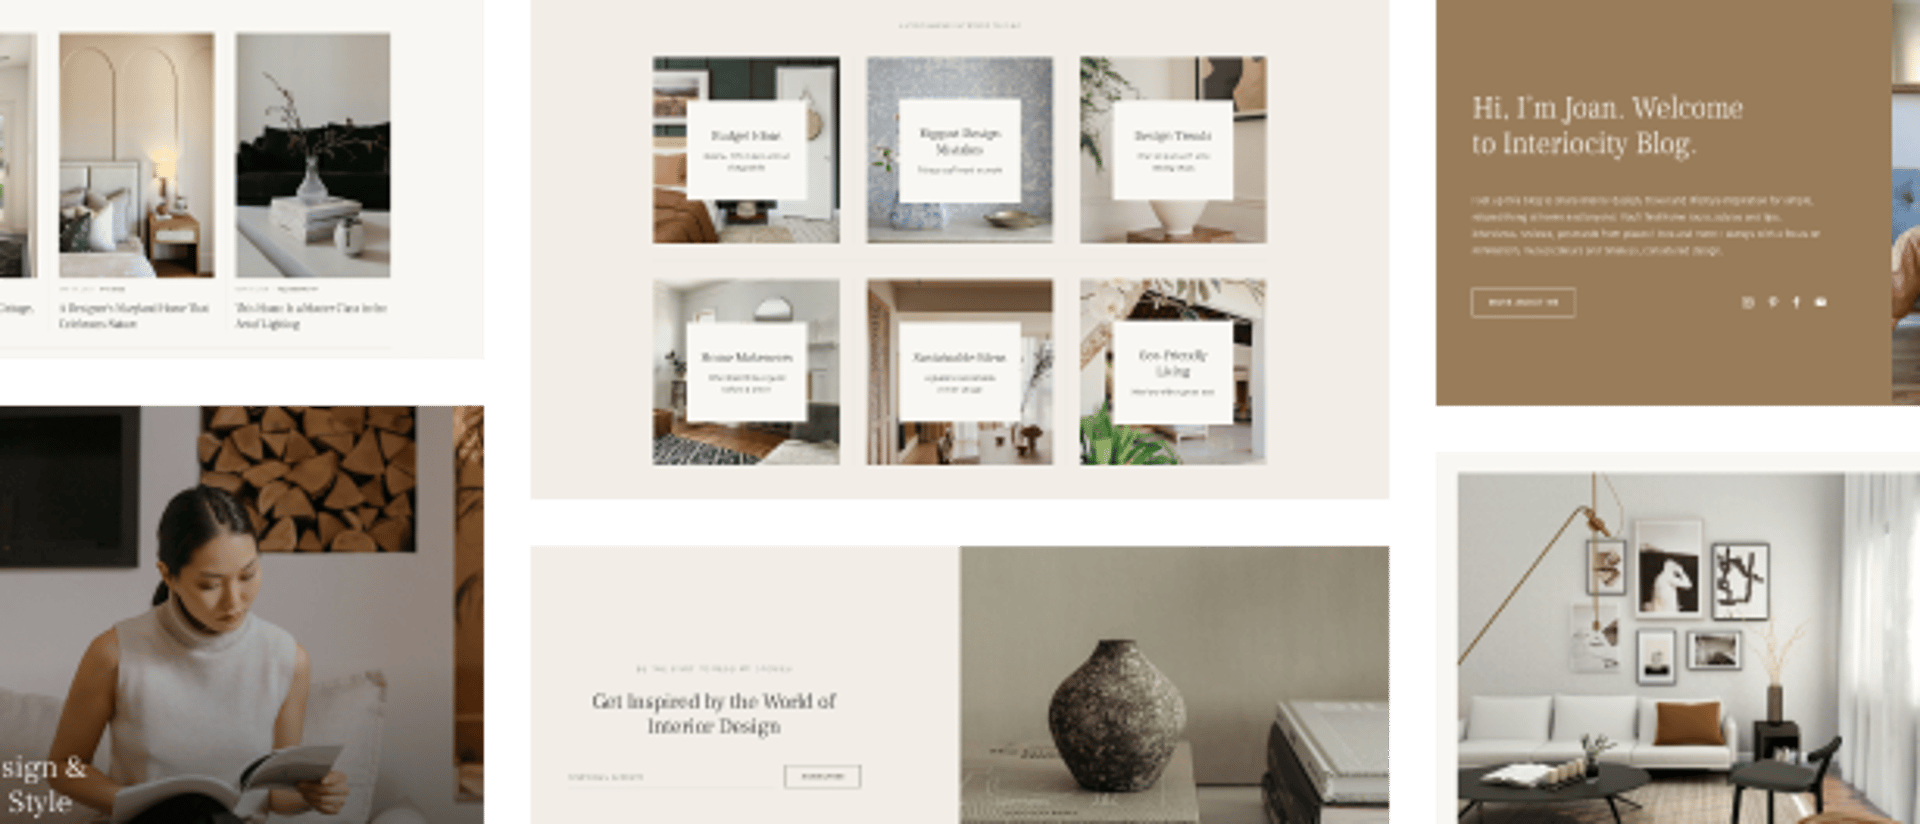 Interiocity - Home Decor Blog and Interior Design Magazine WordPress Theme - Blocks Ready-to-use | CMSMasters studio